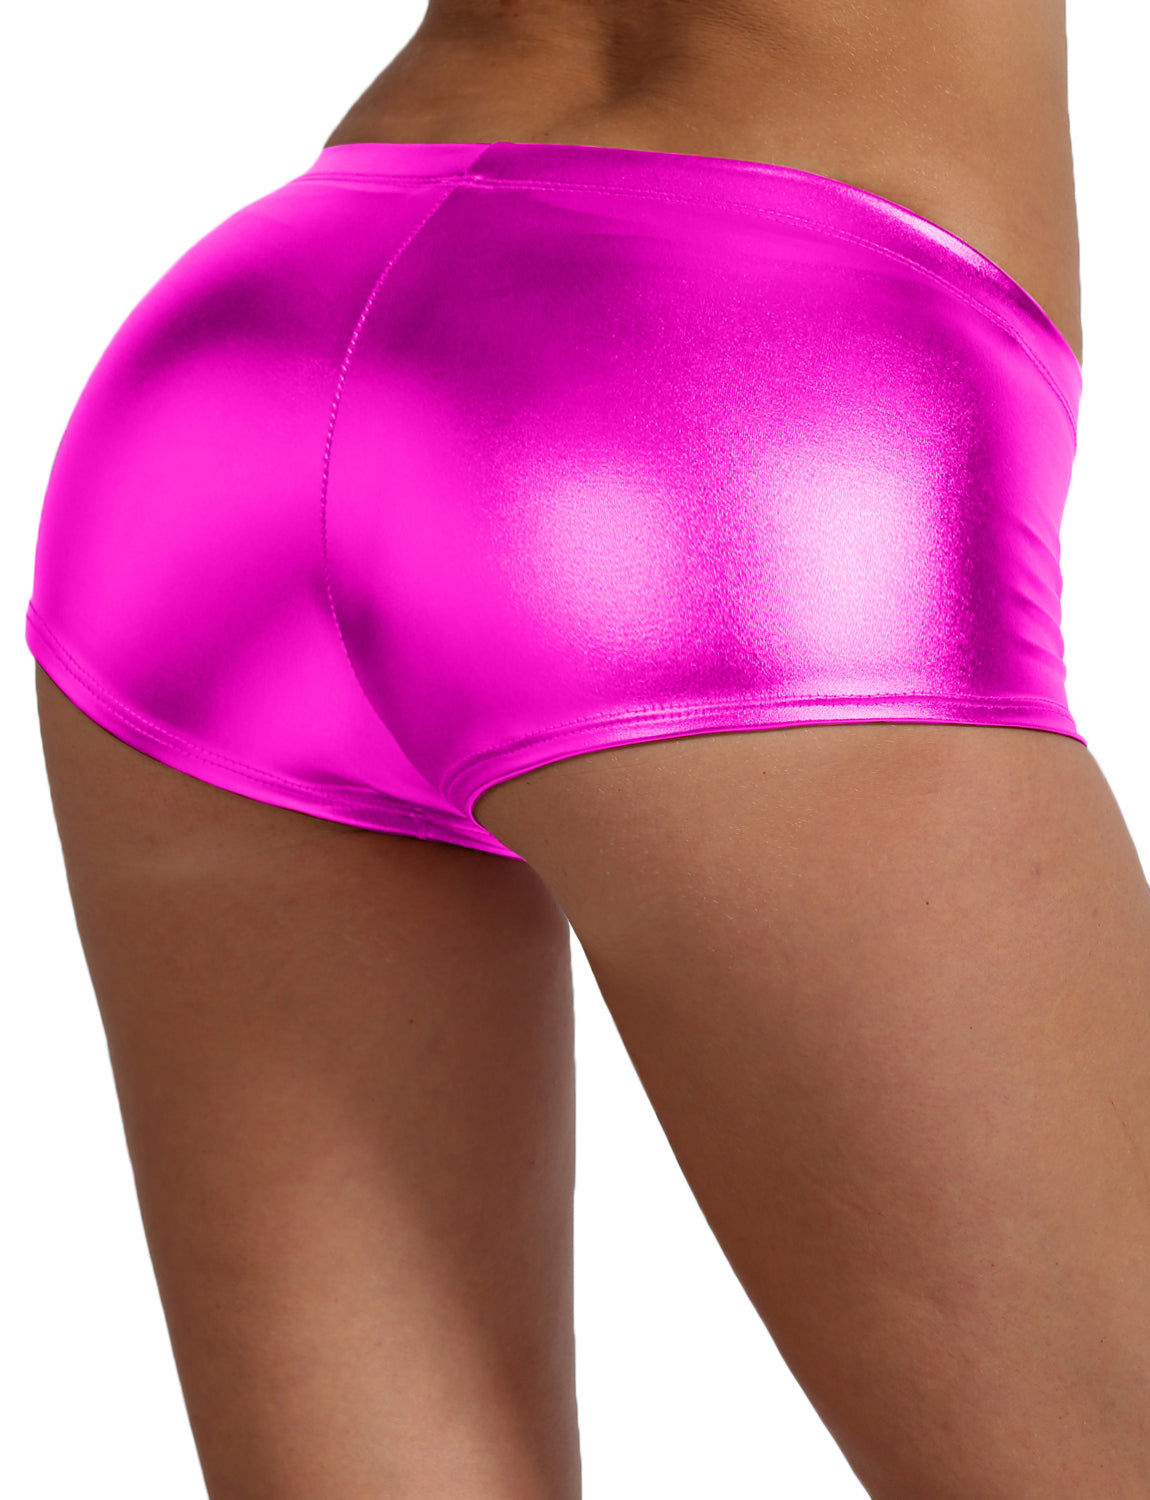 ASEIDFNSA Hot Pink Shorts Womens Jean Shorts Plus Size Oily Silky Shiny  Oversize Shorts Night Club Hot Pants Popular